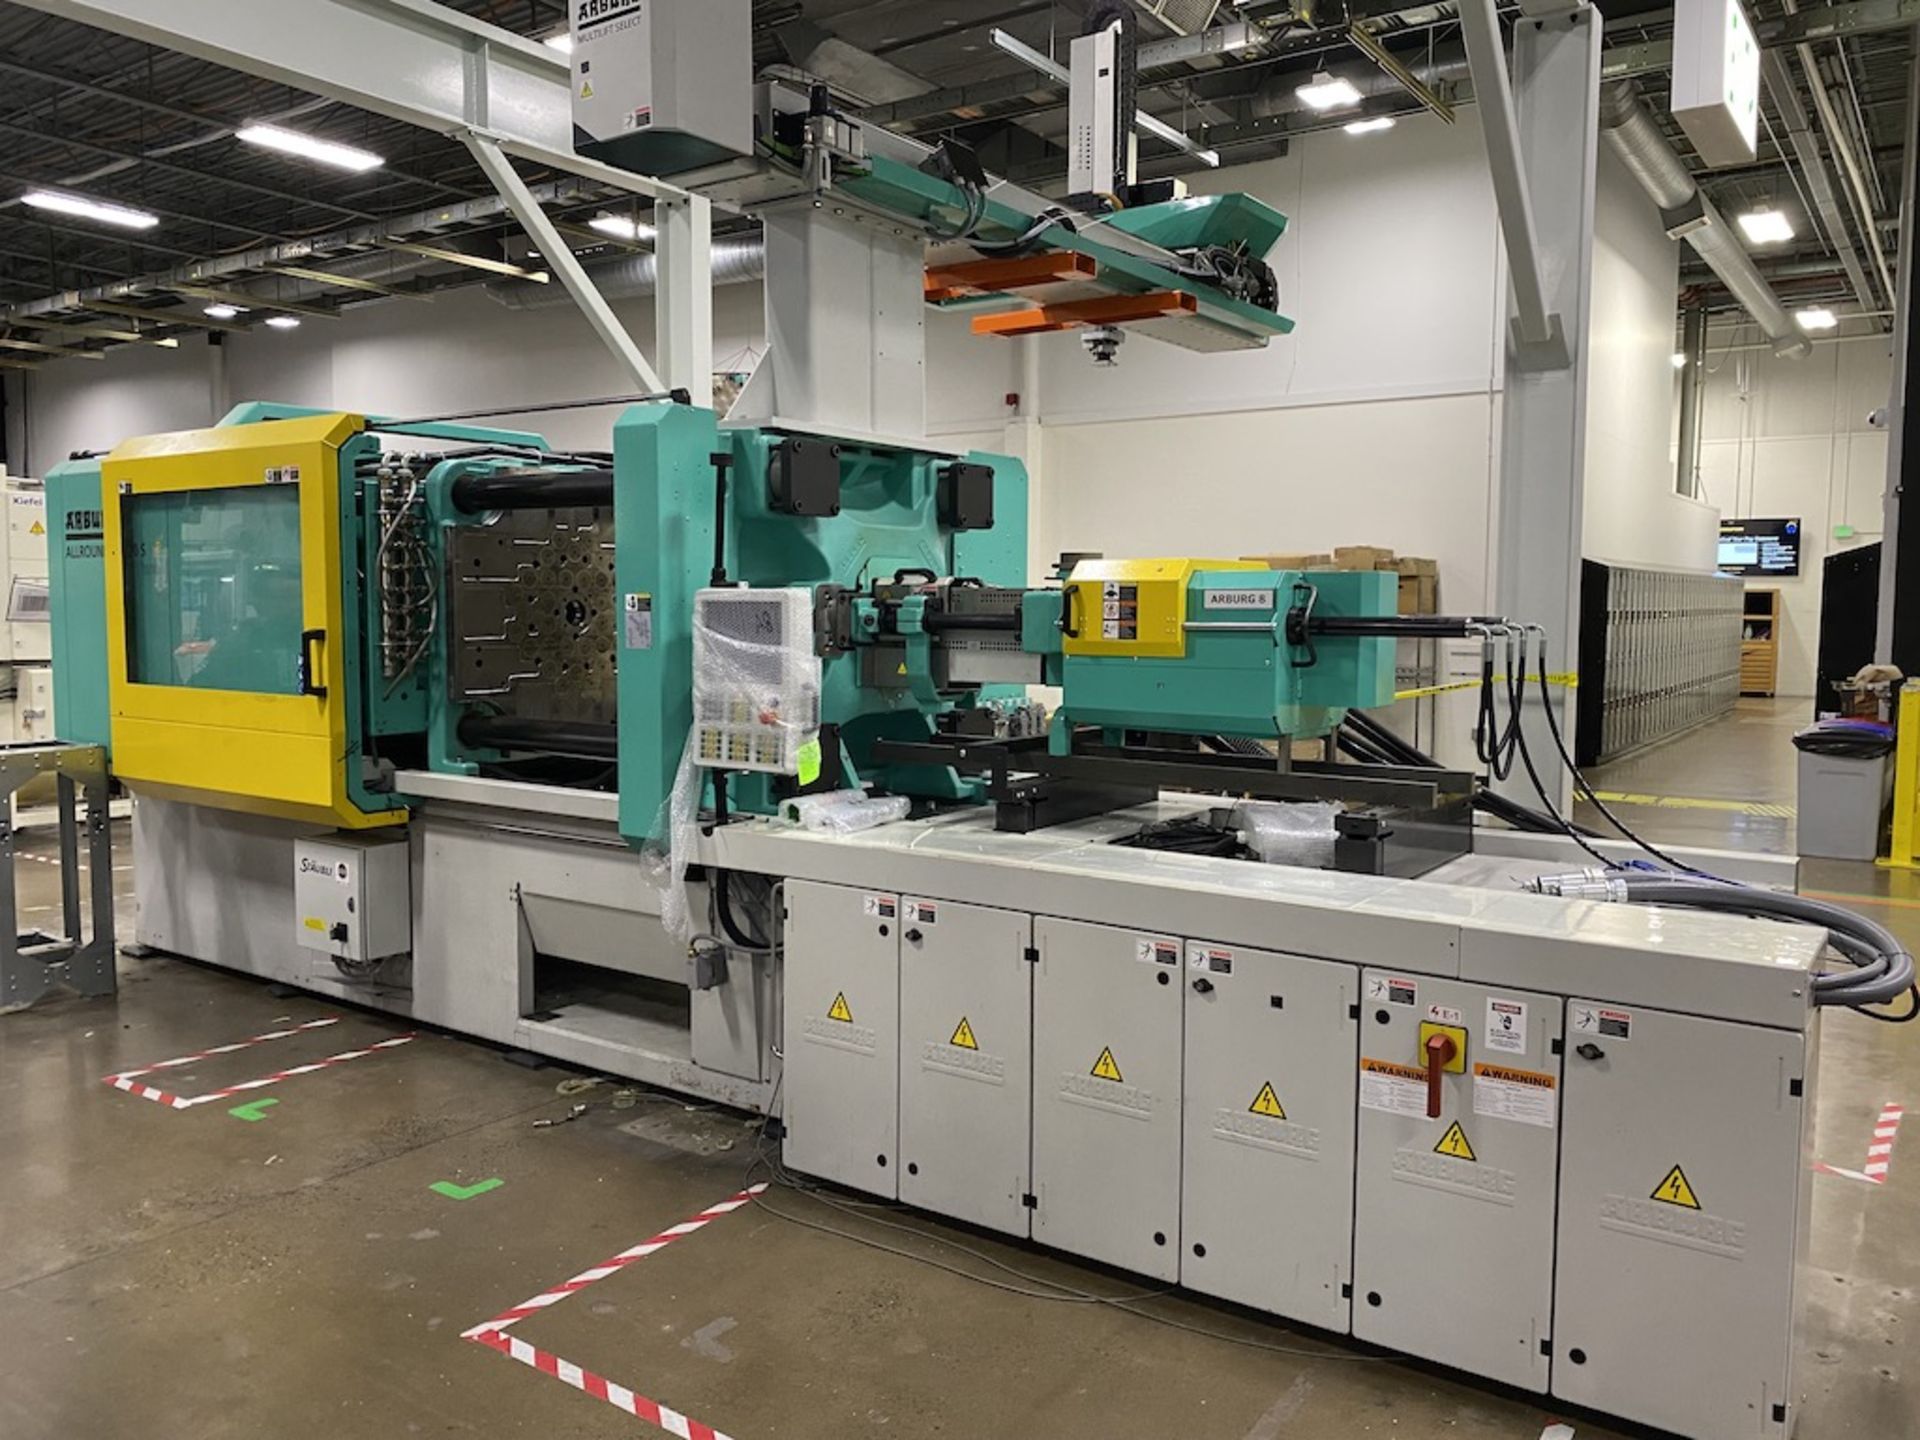 Arburg 320 Metric Ton Injection Molding Press w/Arburg Robot, New in 2015 - Bild 3 aus 8